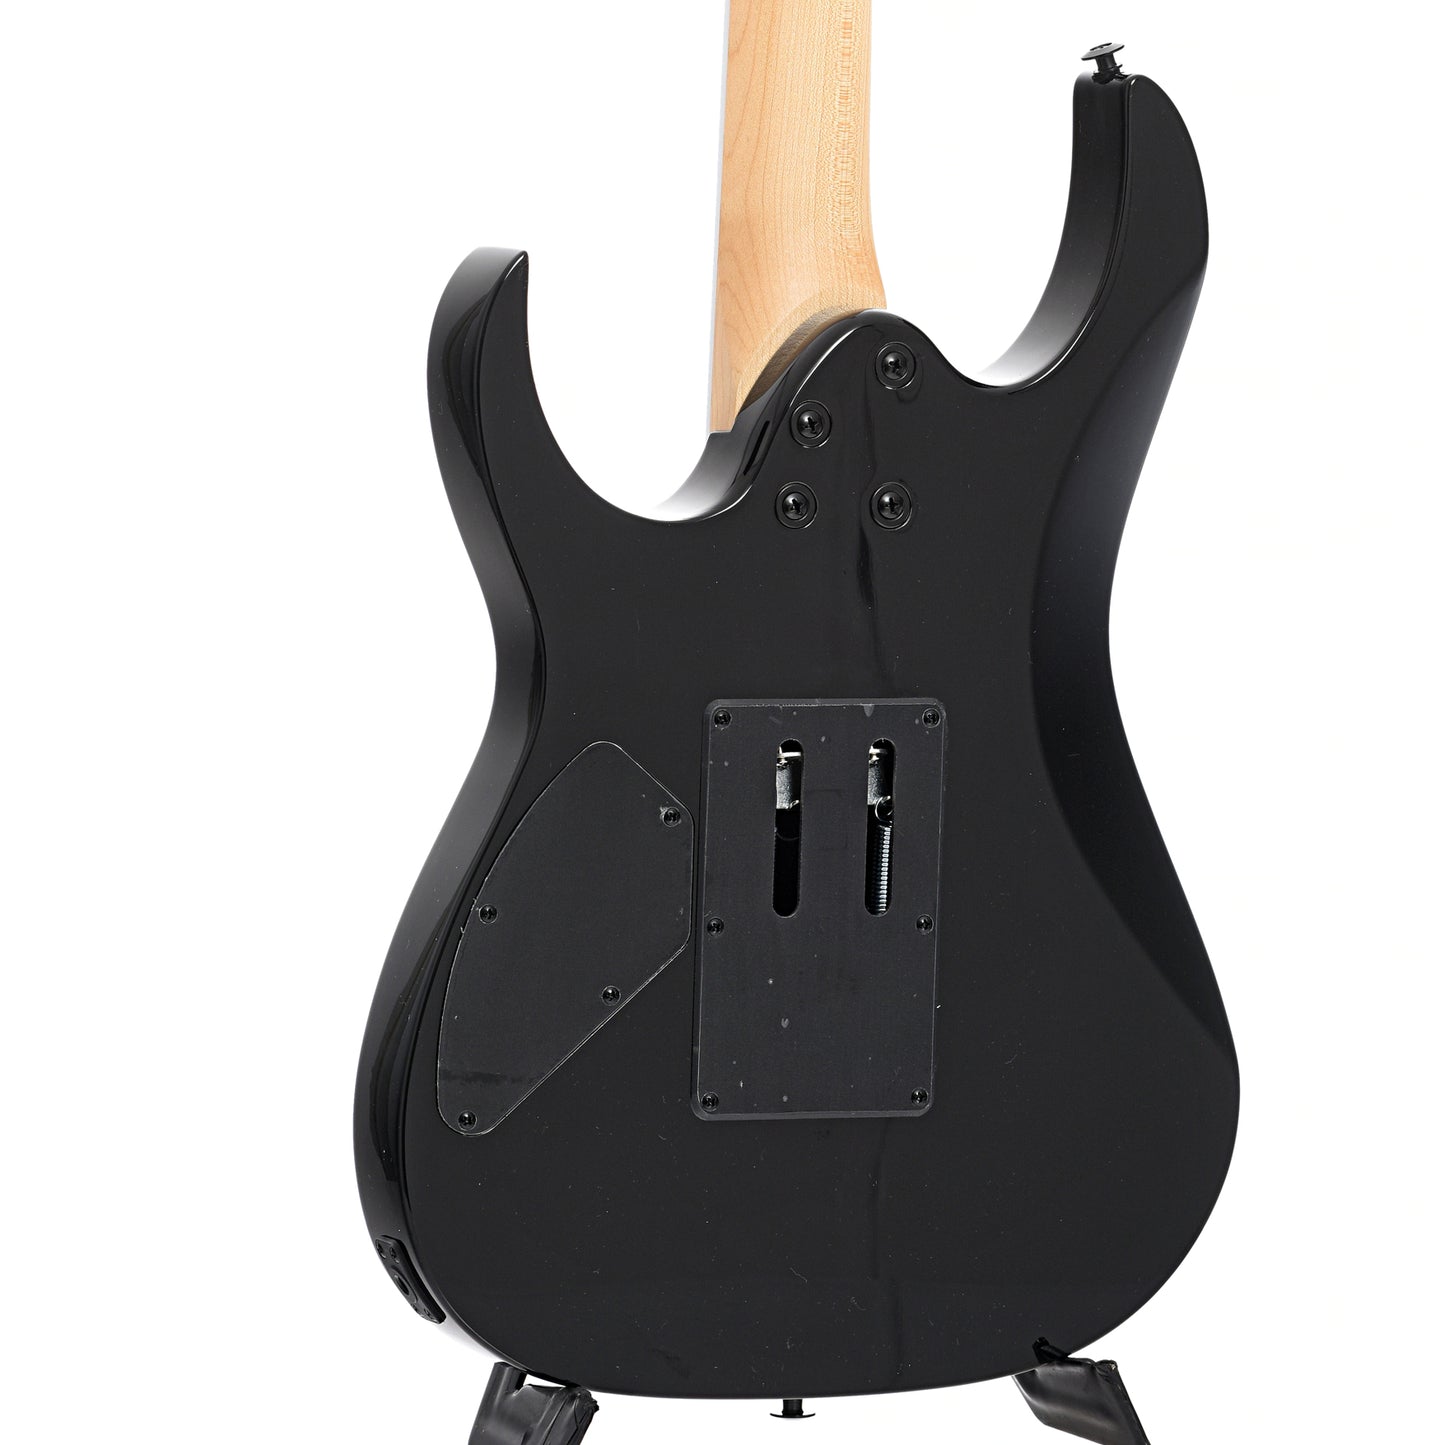 Back and side of Ibanez Gio GRG320FA Electric Guitar, Transparent Black Sunburst